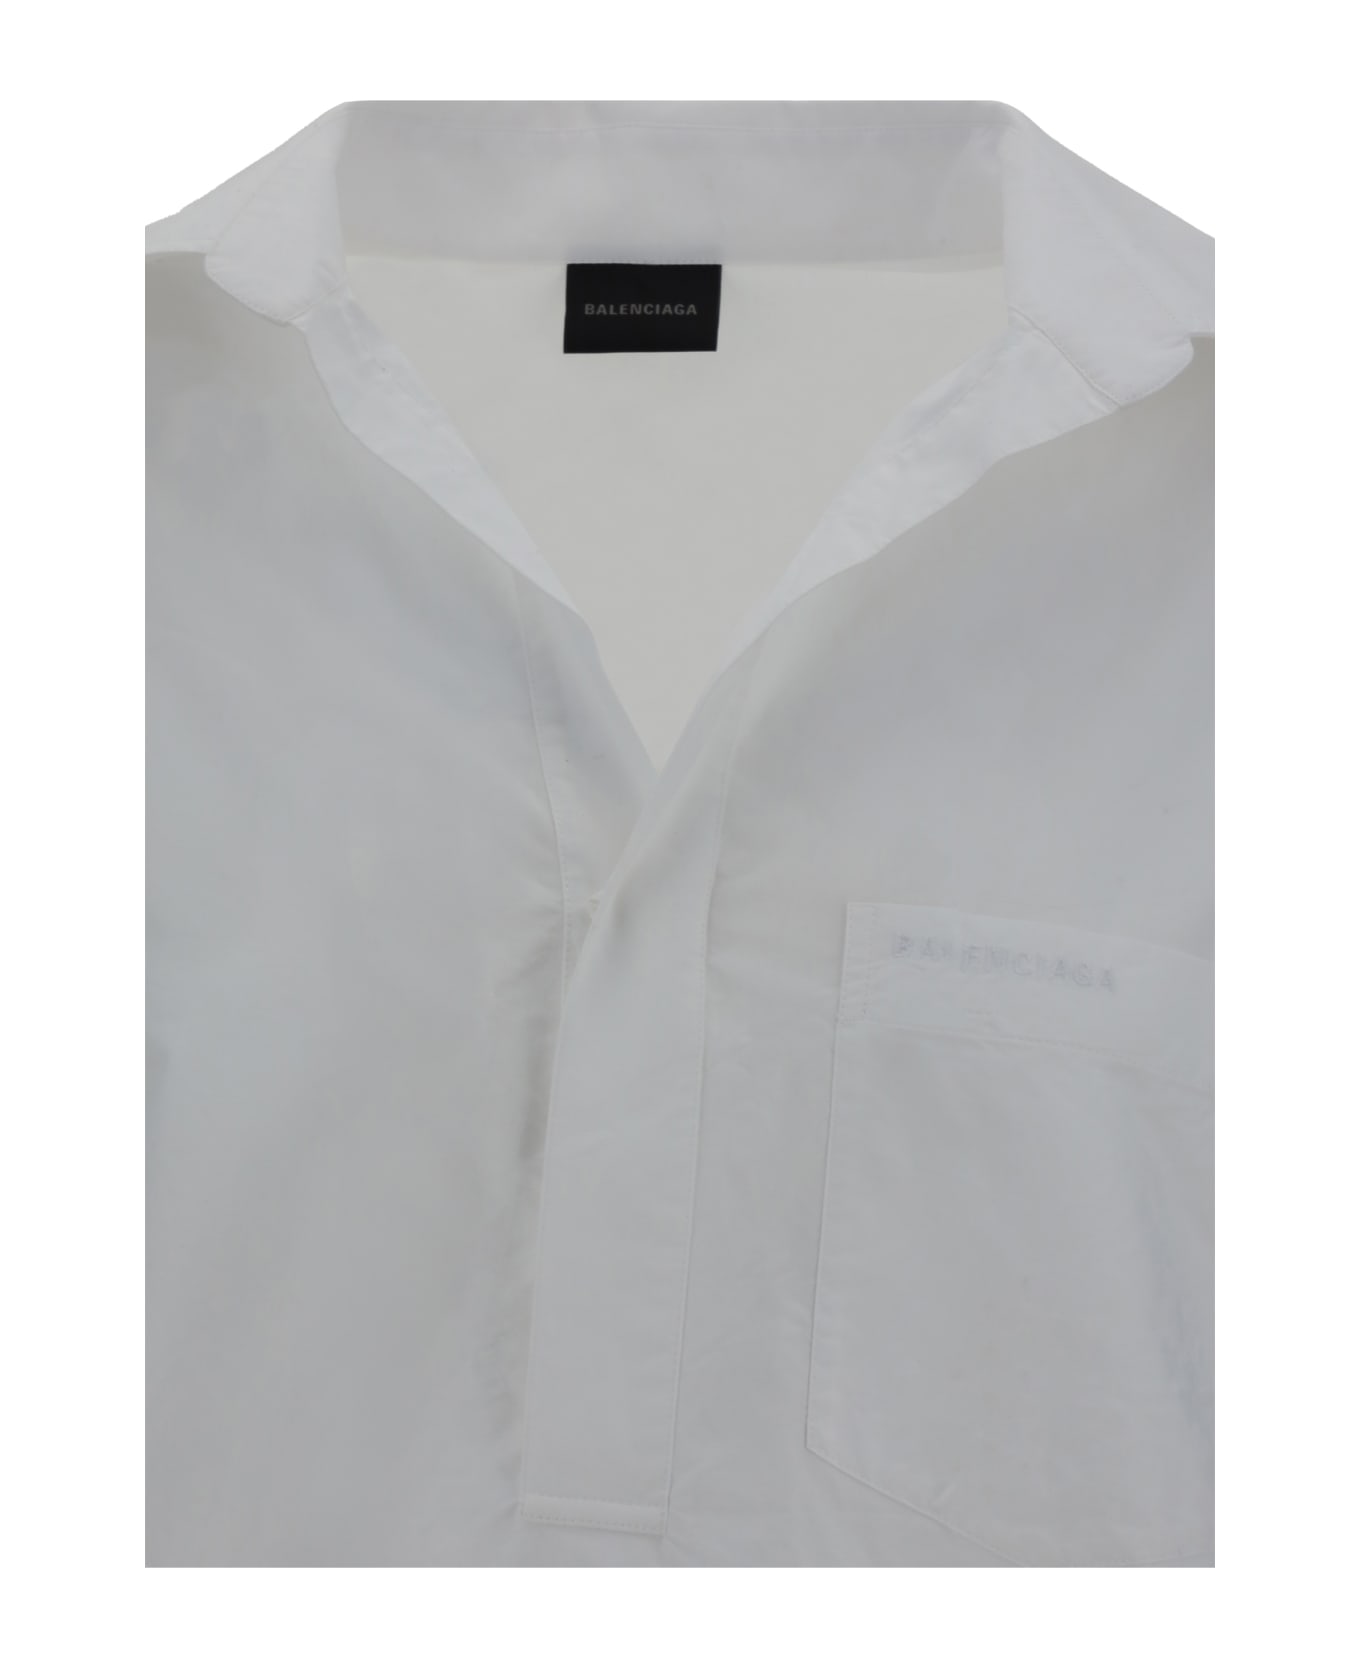 Balenciaga Crinkled Cotton Shirt - White シャツ